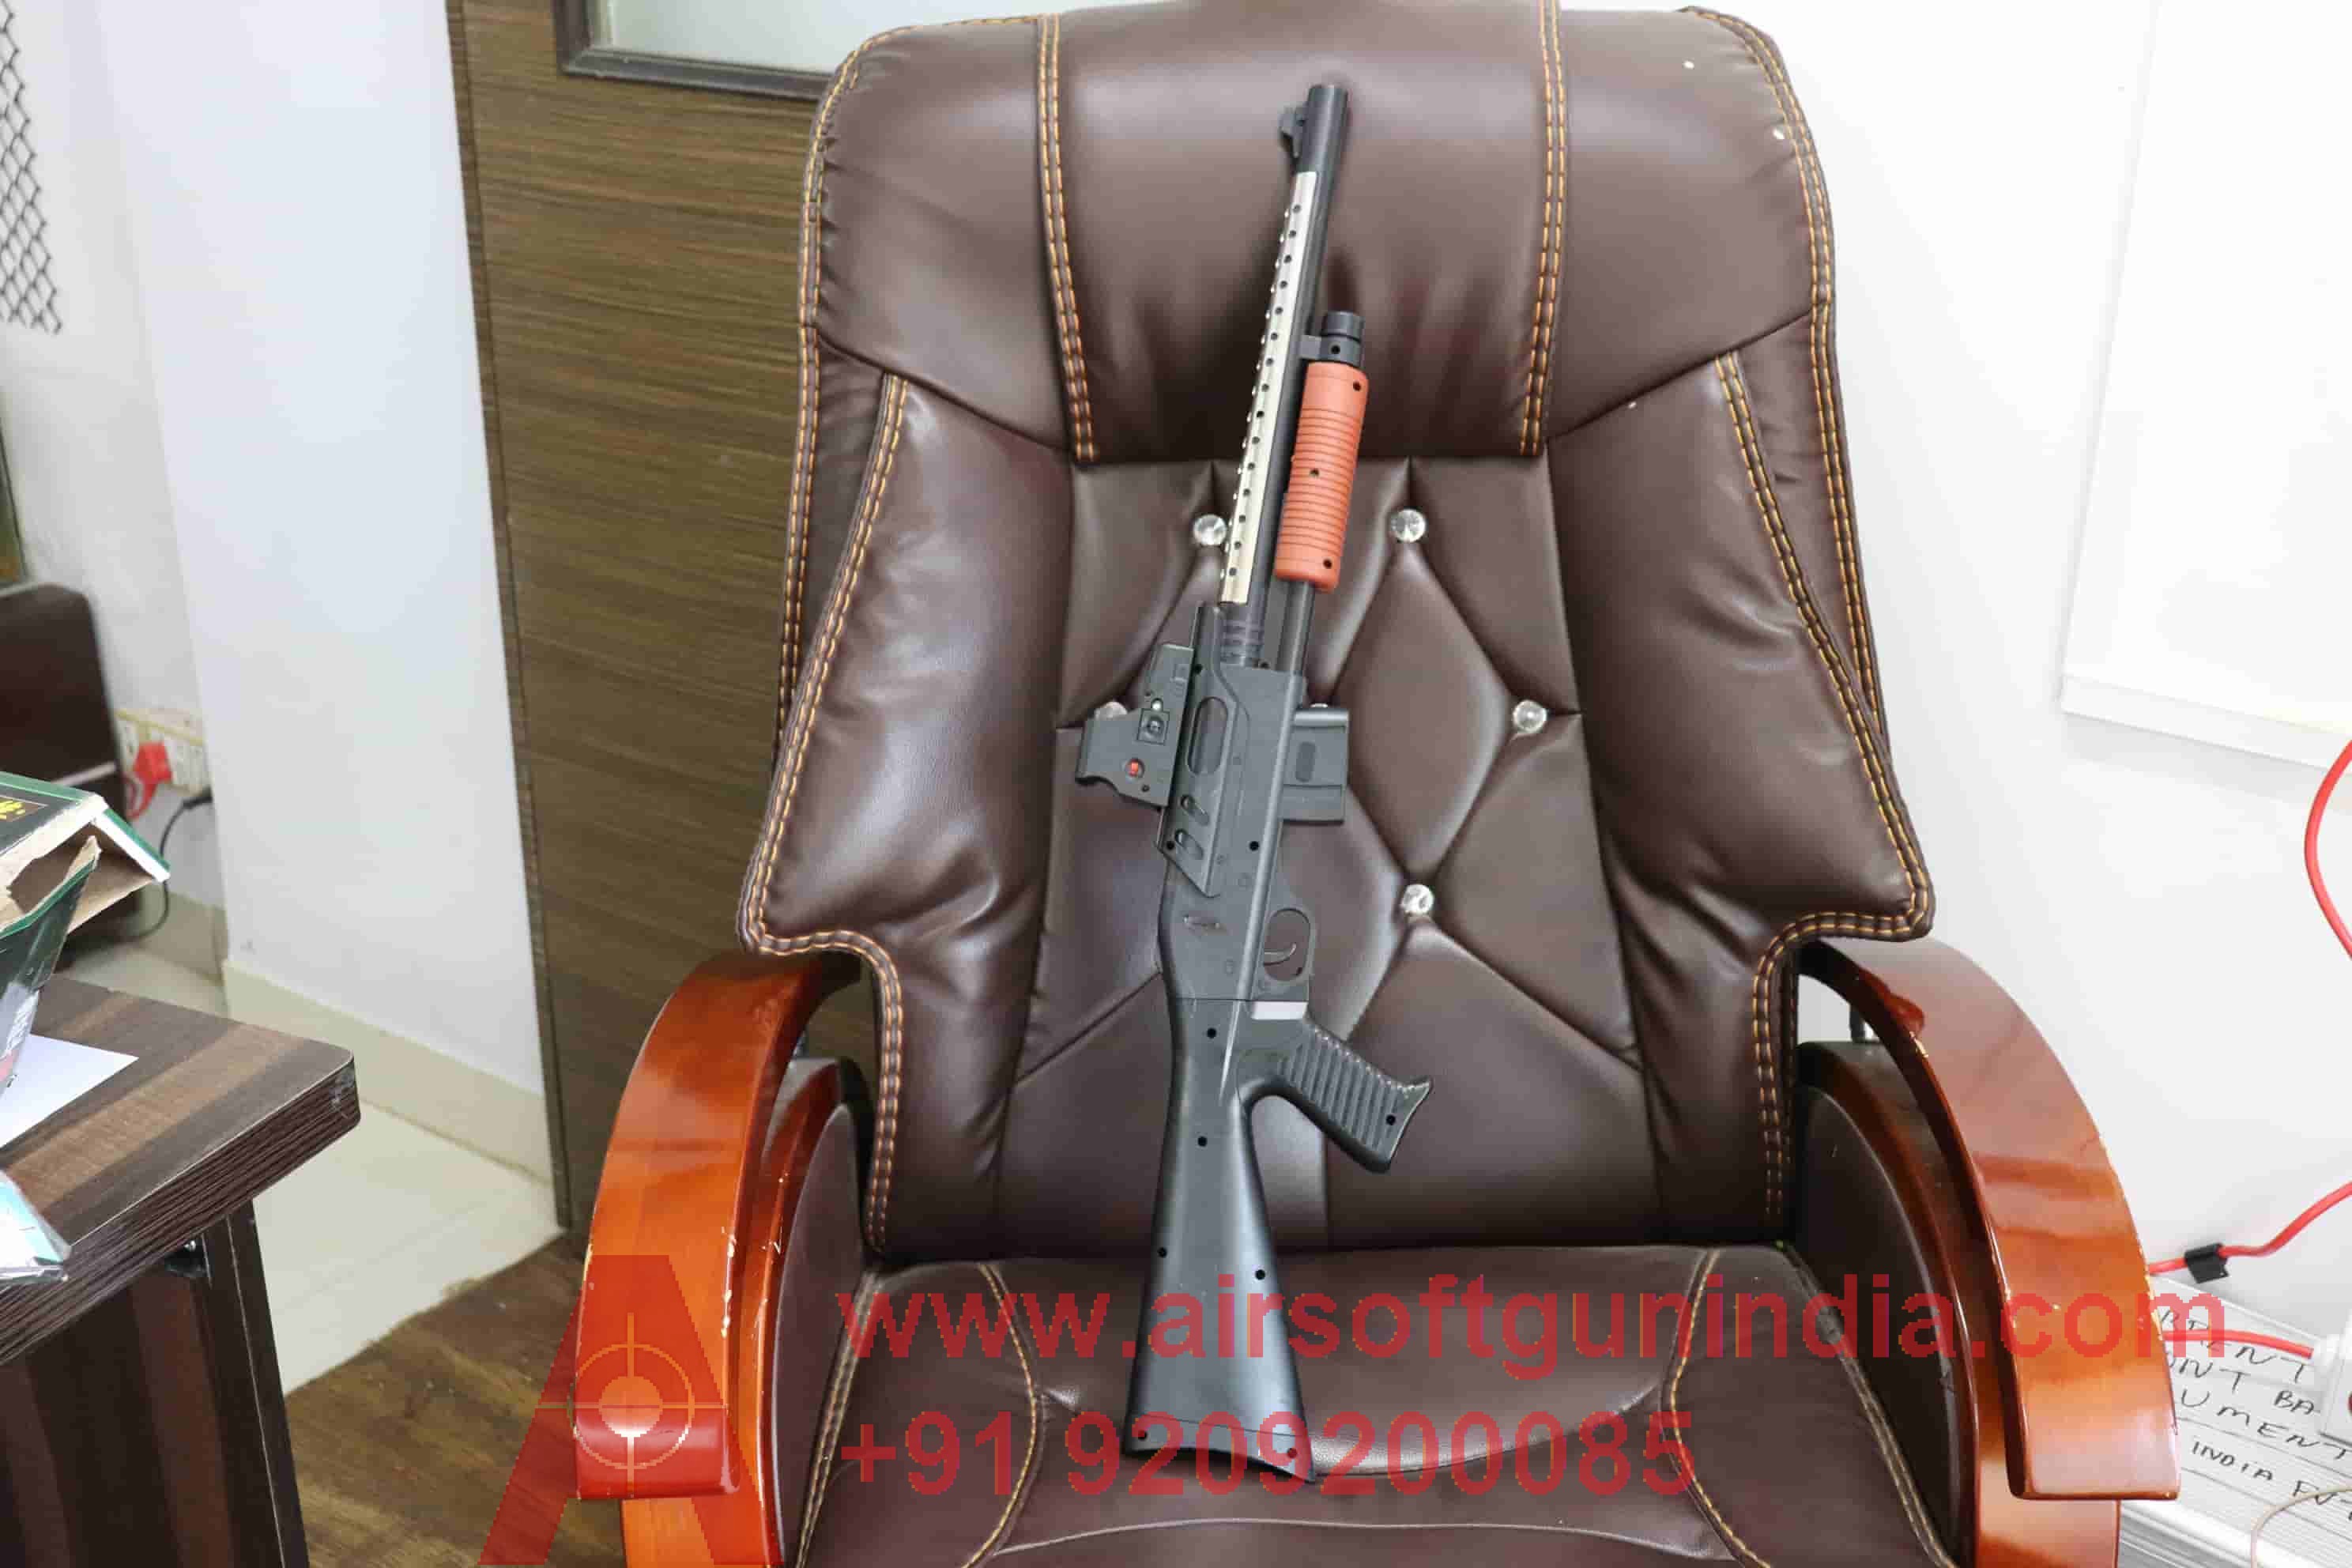 Shot Gun With Stock By Airsoft Gun India